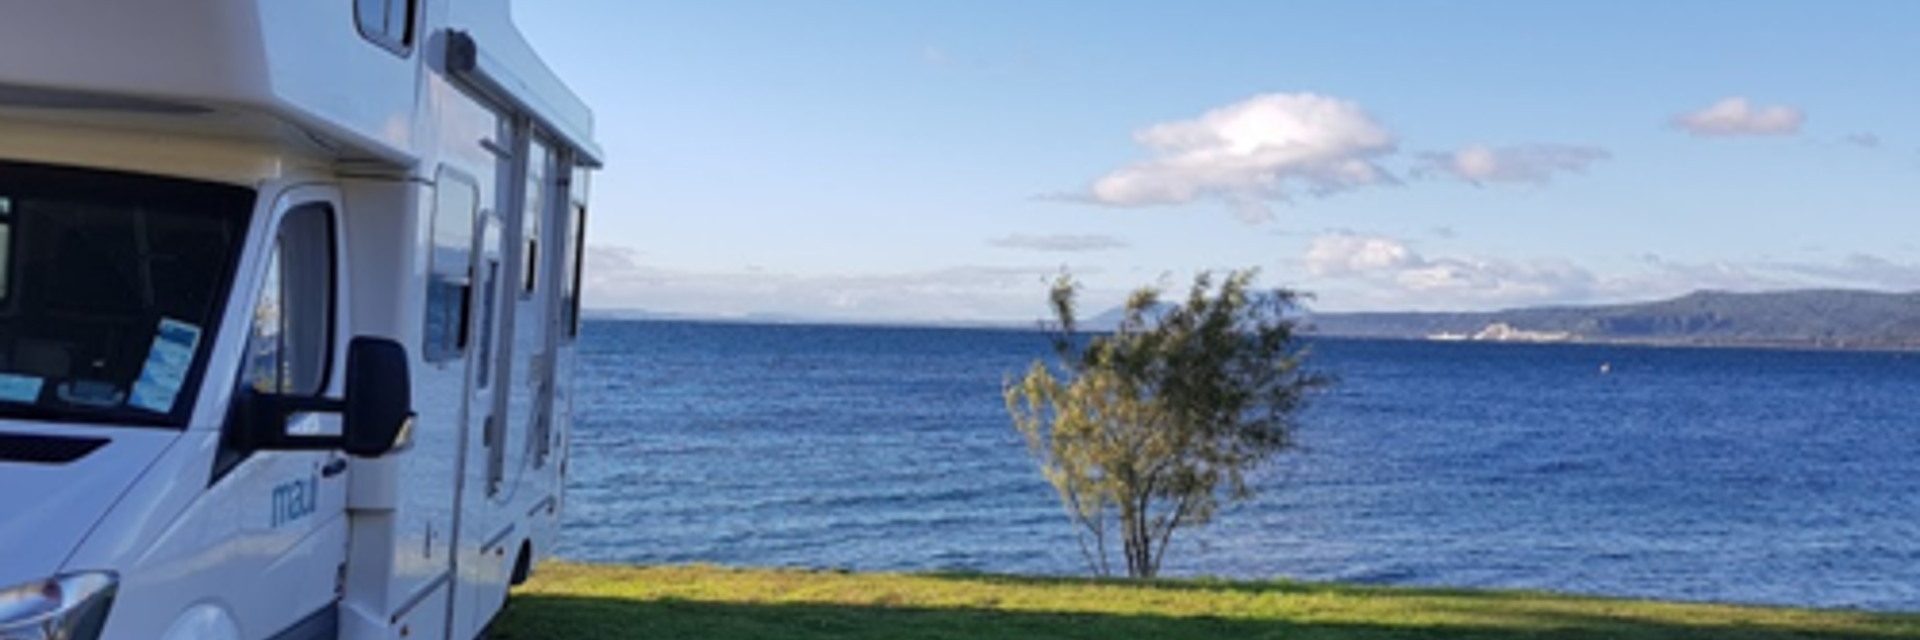 Lakeside Powered Site Motutere Bay